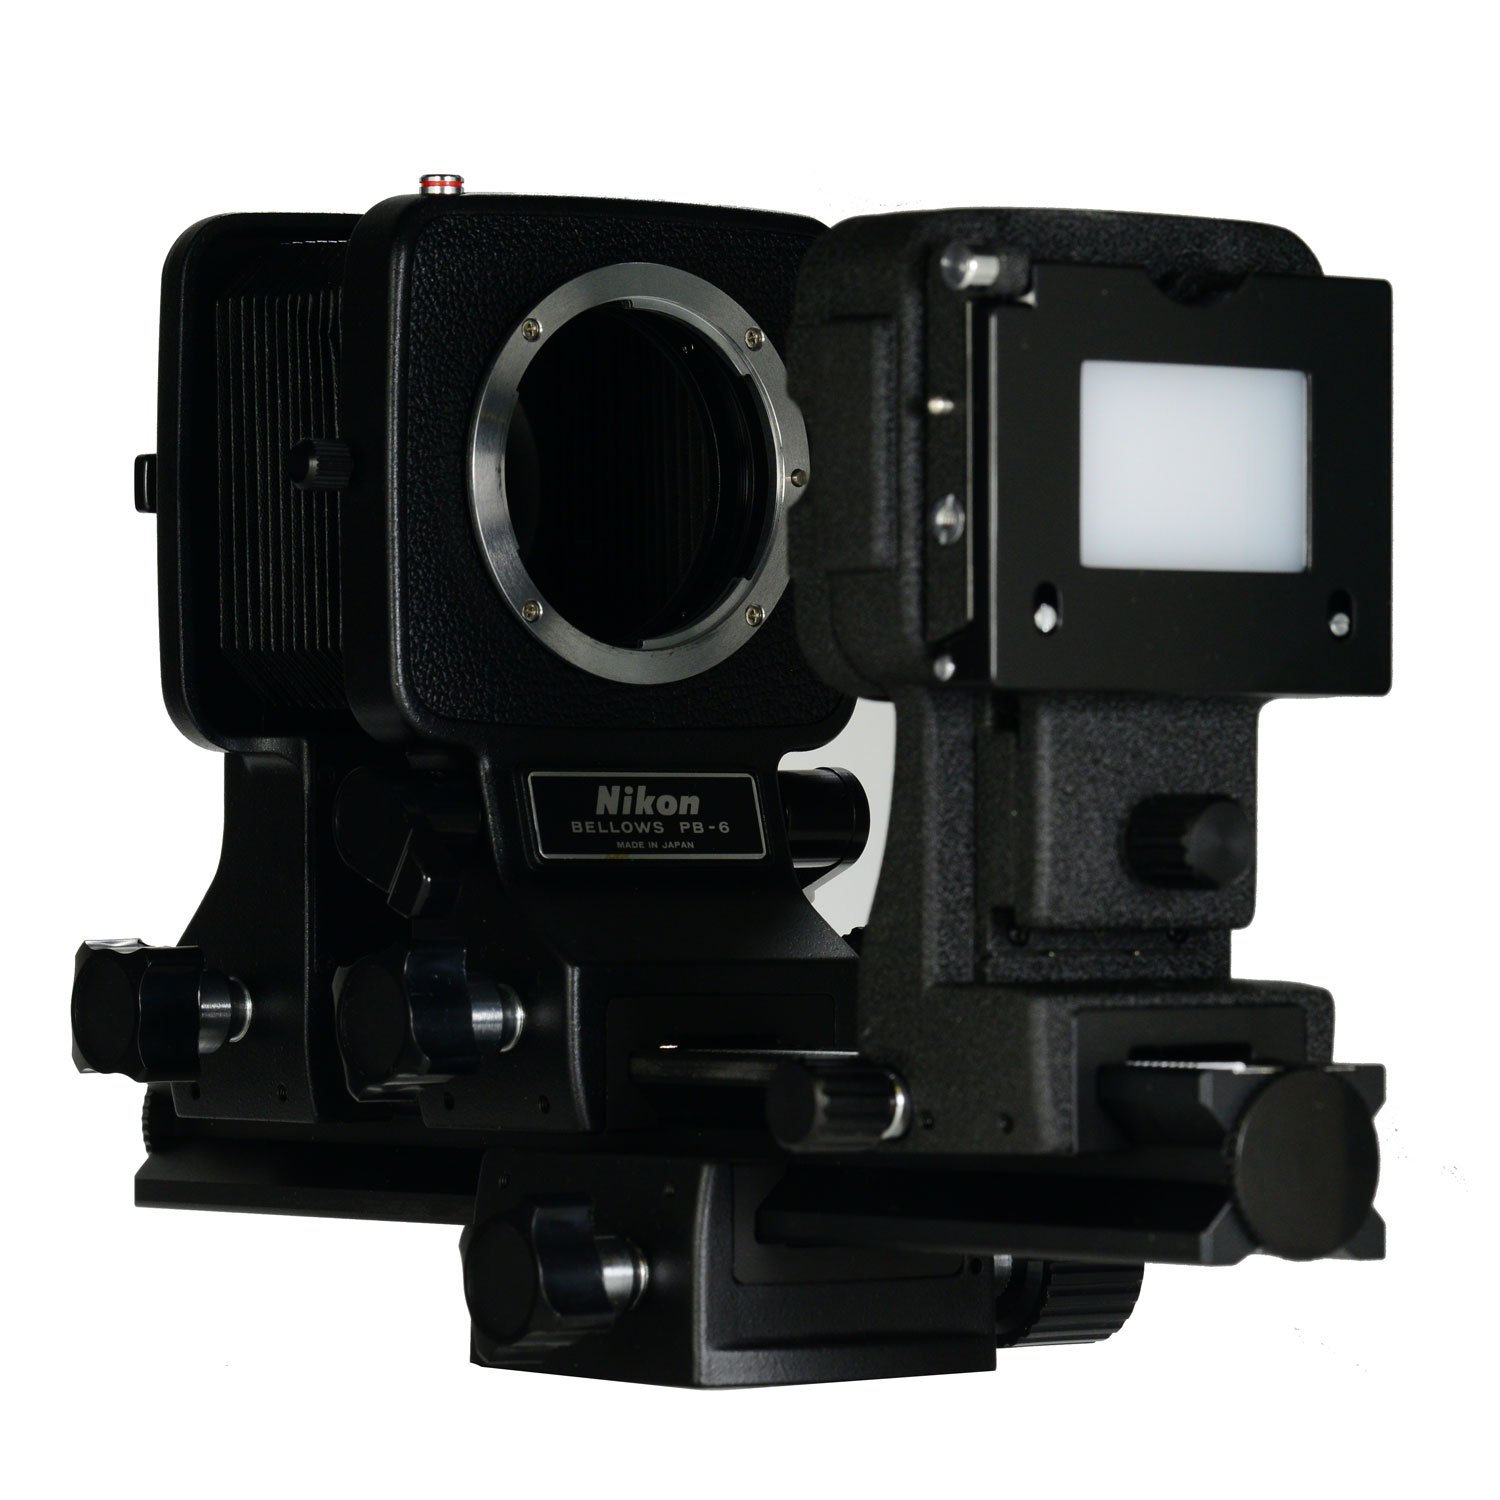 Мех Nikon PB-6 Bellows Focusing Attachment + PS-6 Slide Copying Adapter б/у